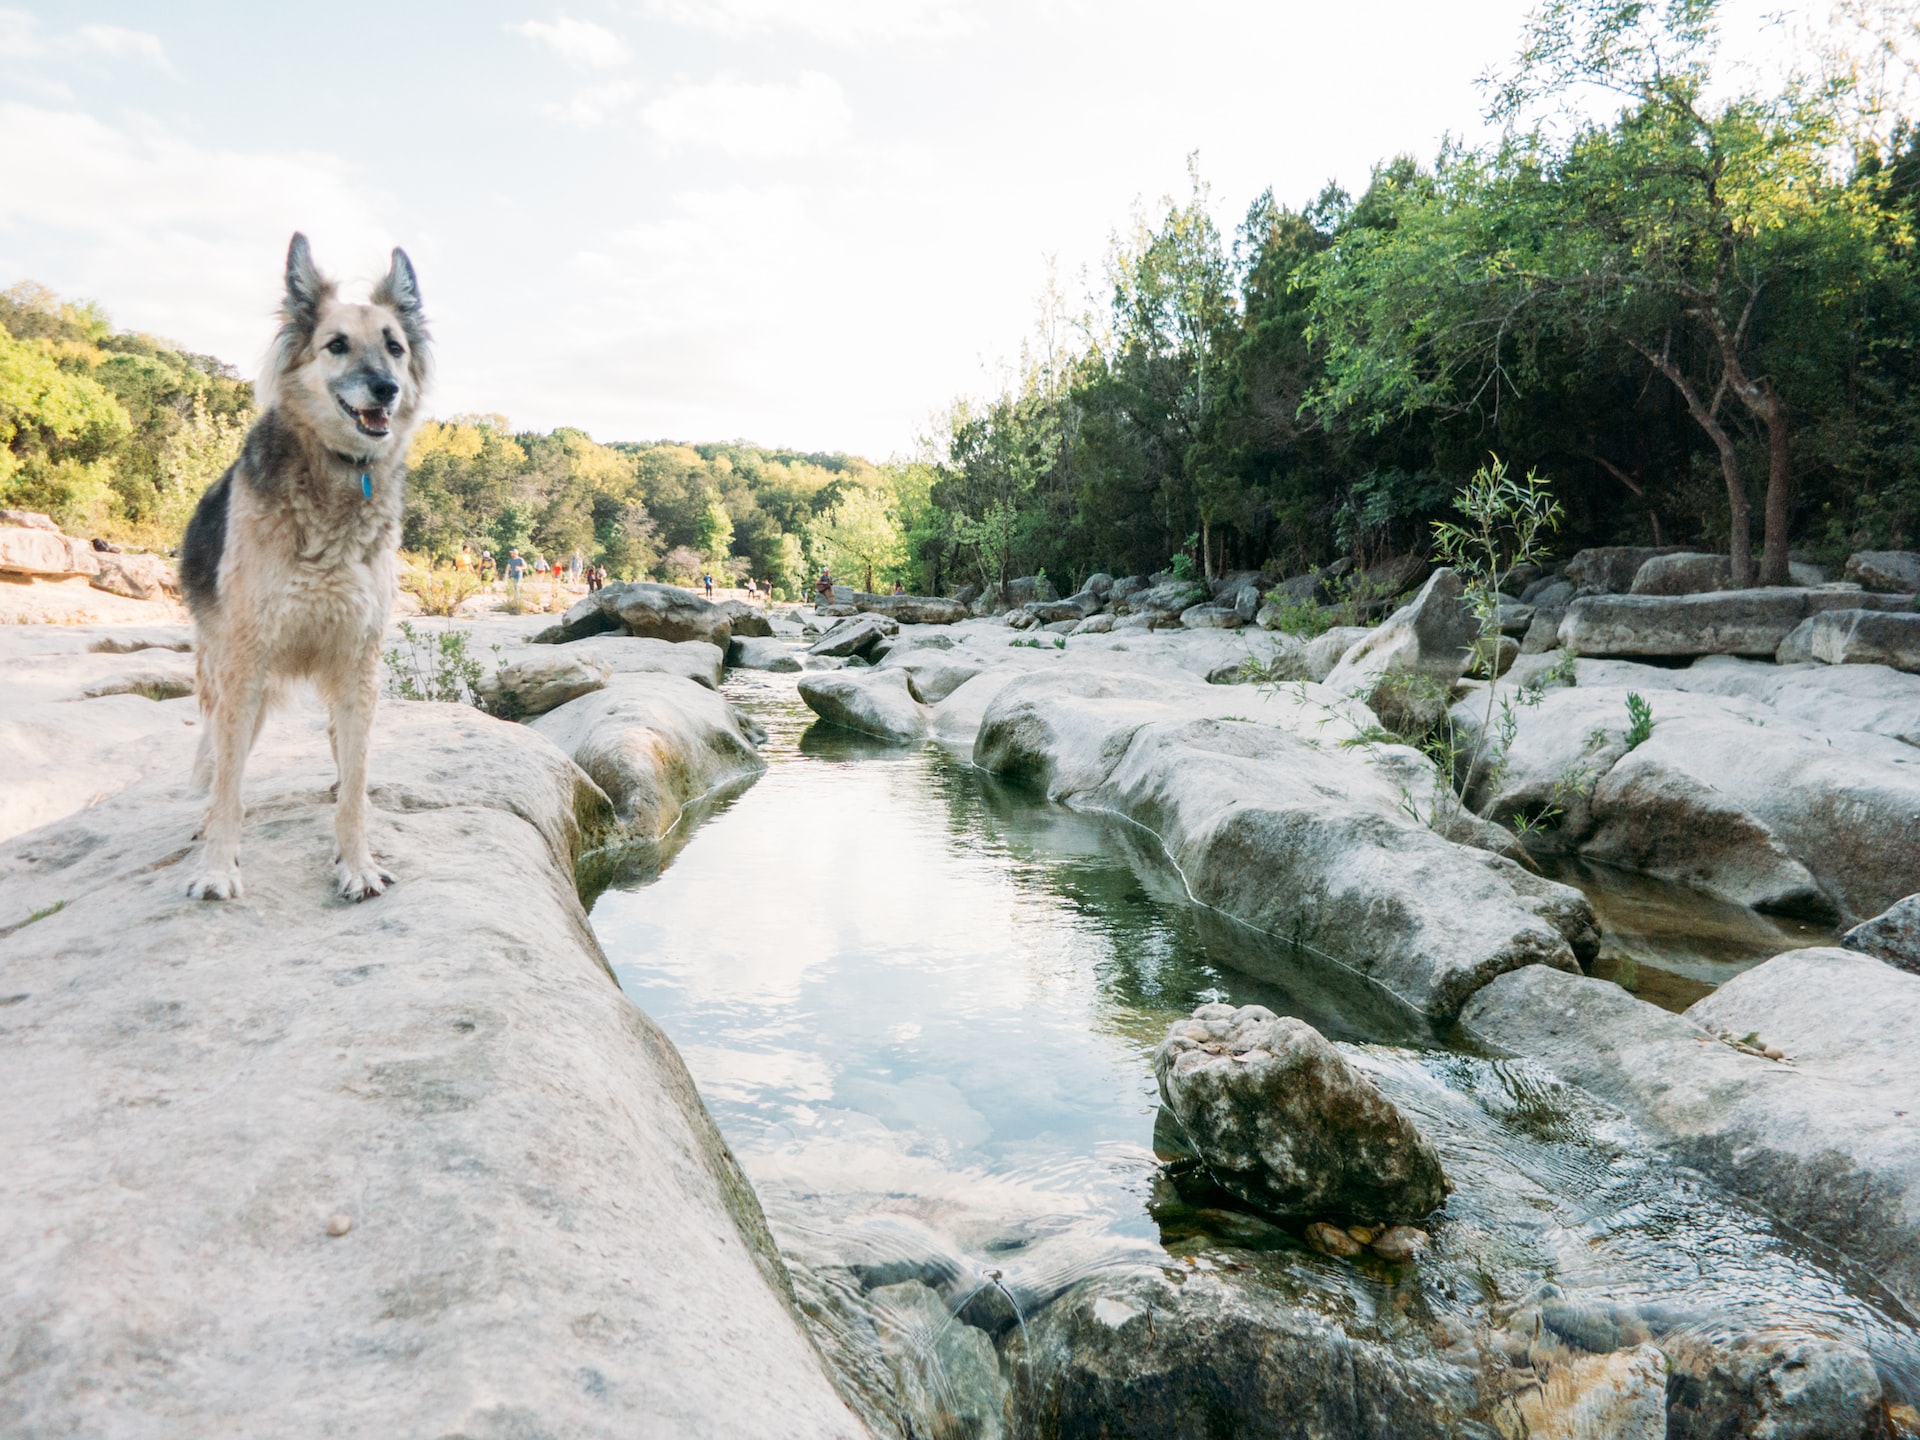  A dog standing at Campbell's Hole, Barton Creek Greenbelt, Austin, Texas.